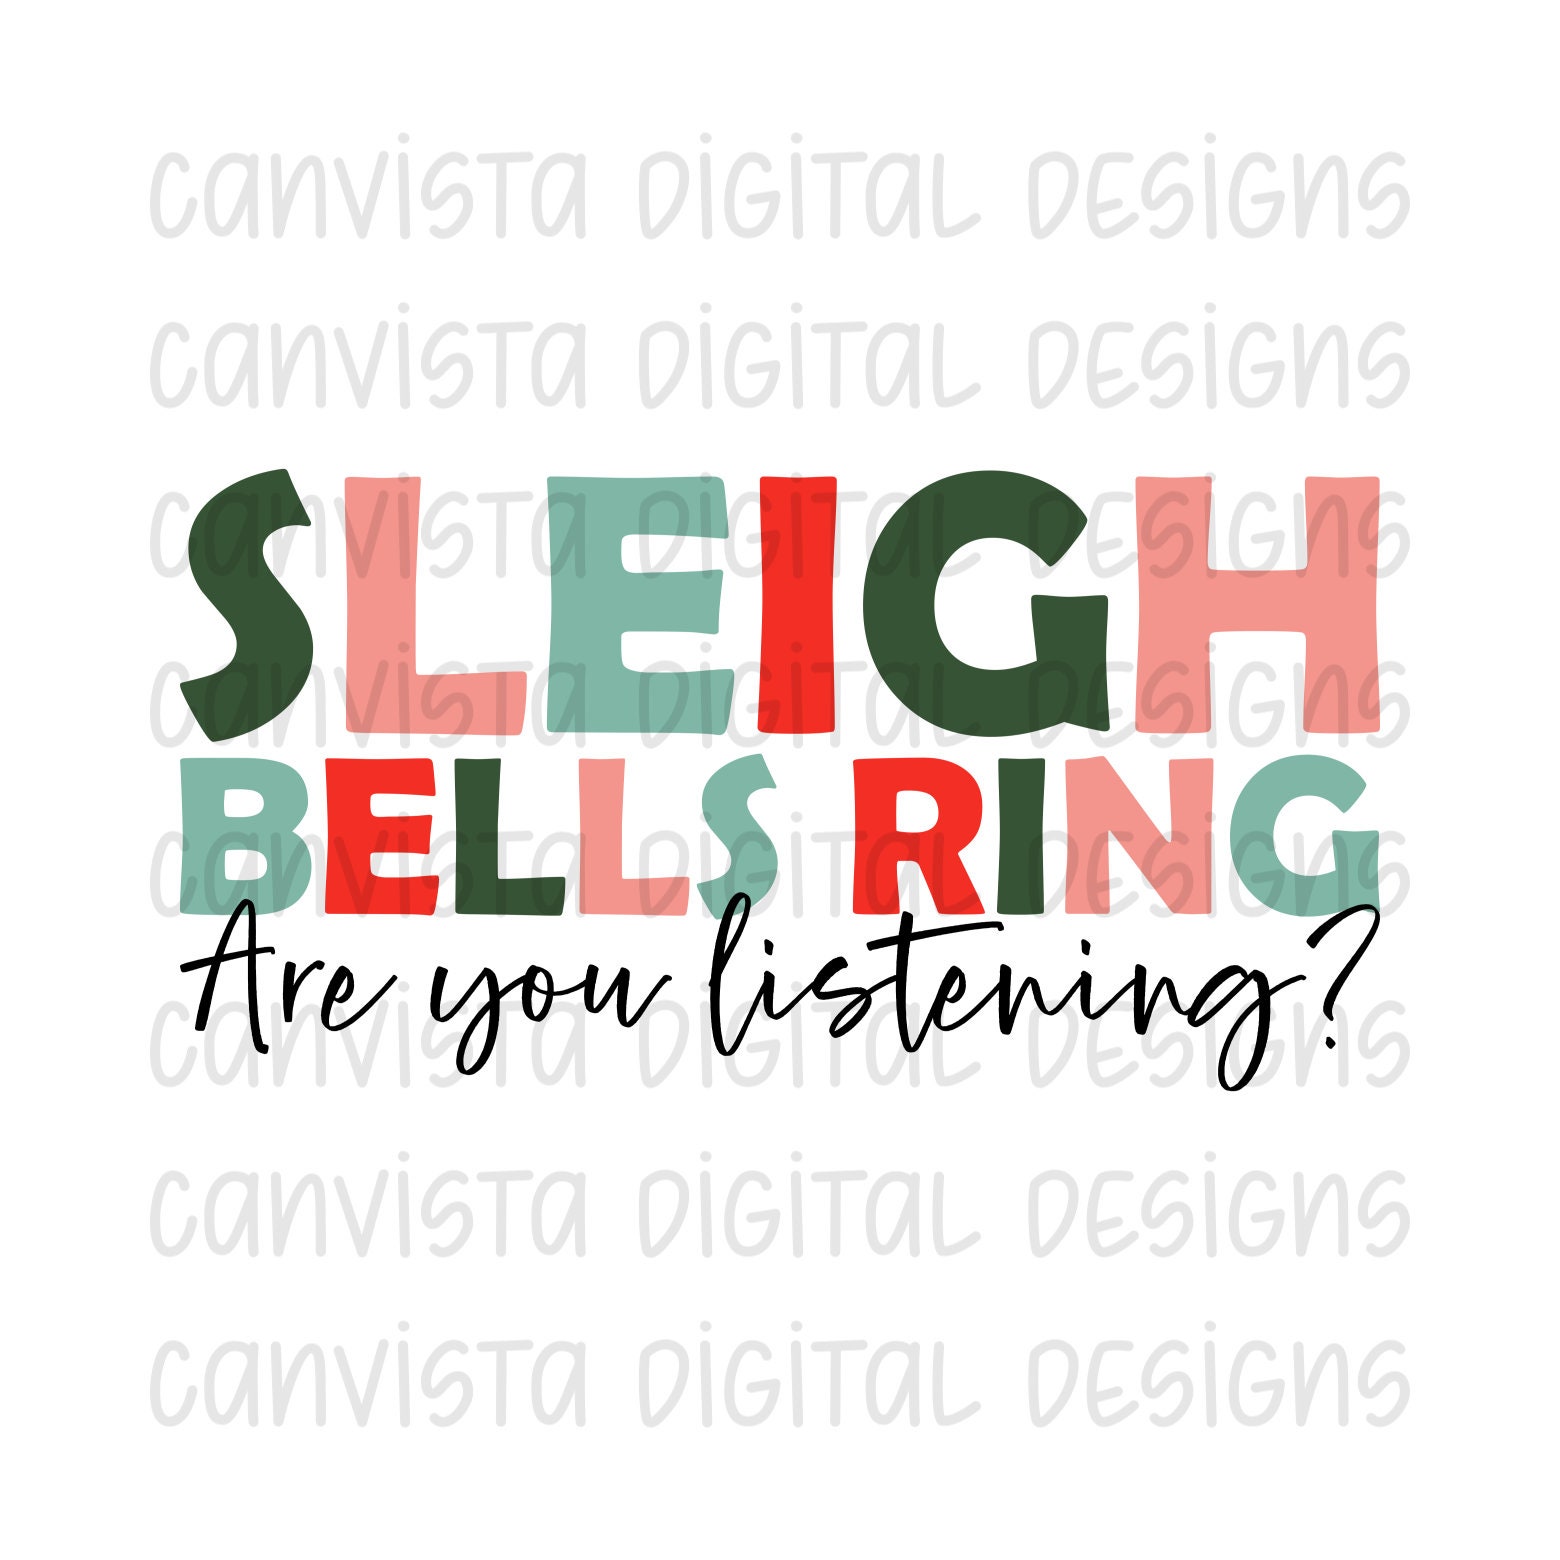 Sleigh Bells Ring - Shirtoid